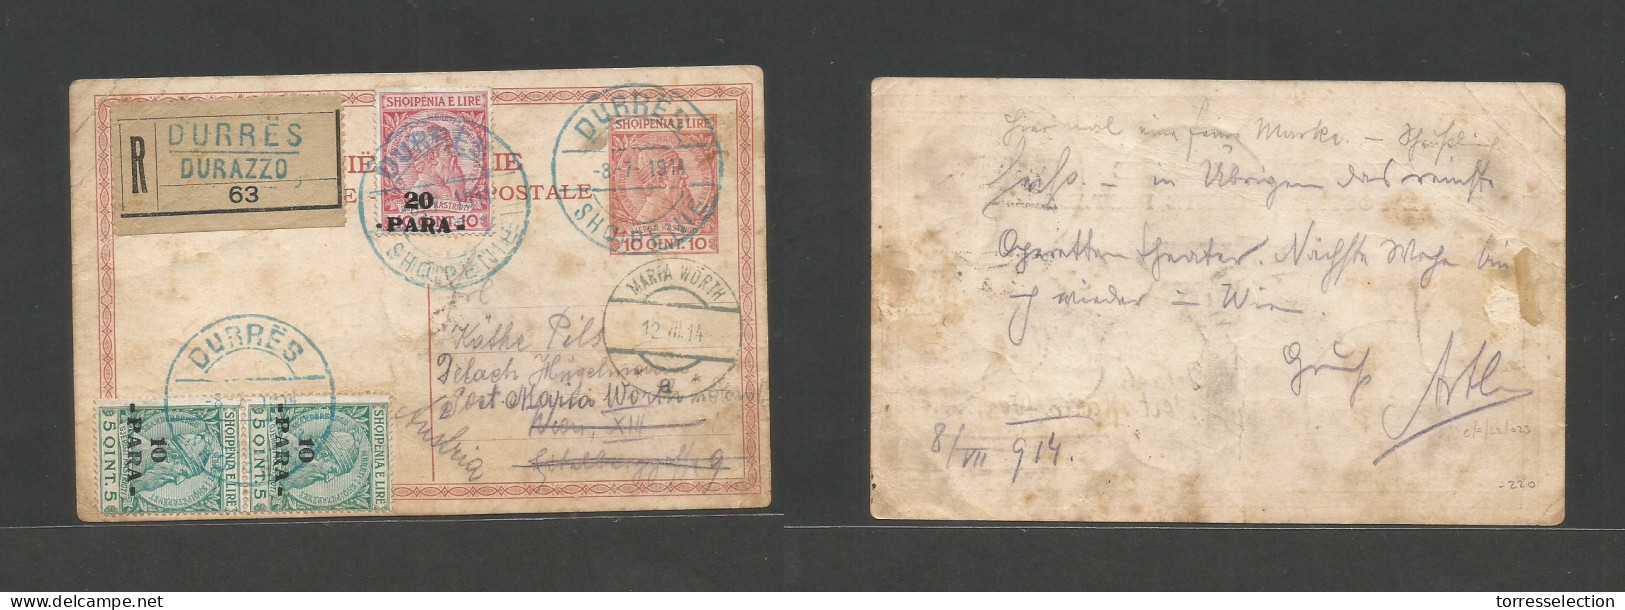 ALBANIA. 1914 (8 July) Durres, Durazzo - Austria, Maria Worth (12 July) Registered 10c Rose Stat Card + 3 Adtls, Tied Bl - Albania